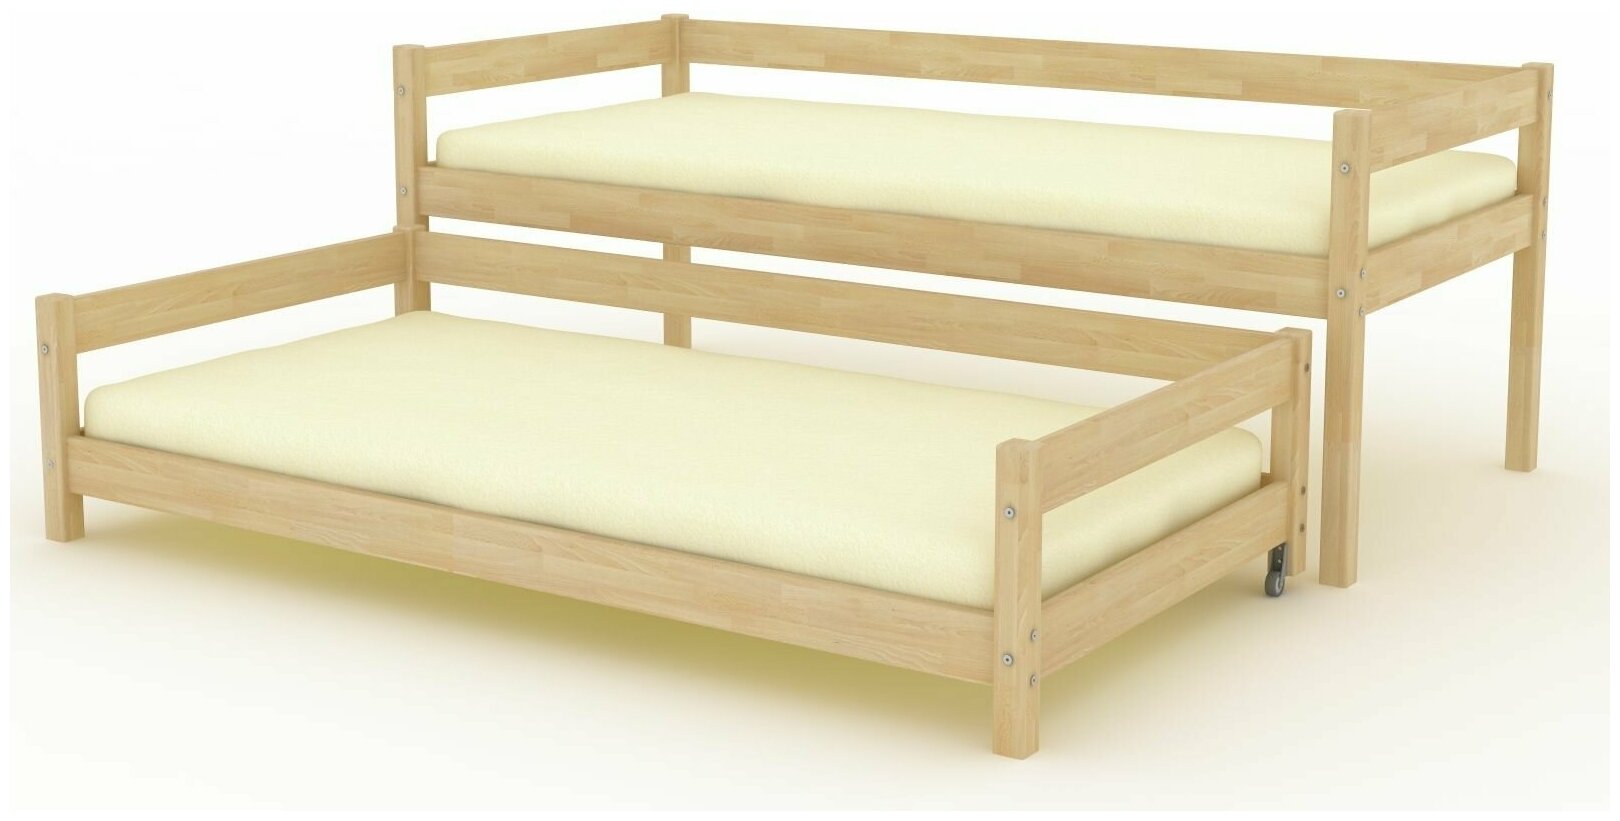 Двухъярусная-выкатная кровать "Берёзка 13" без покрытия, 80x190 см, ORTMEX